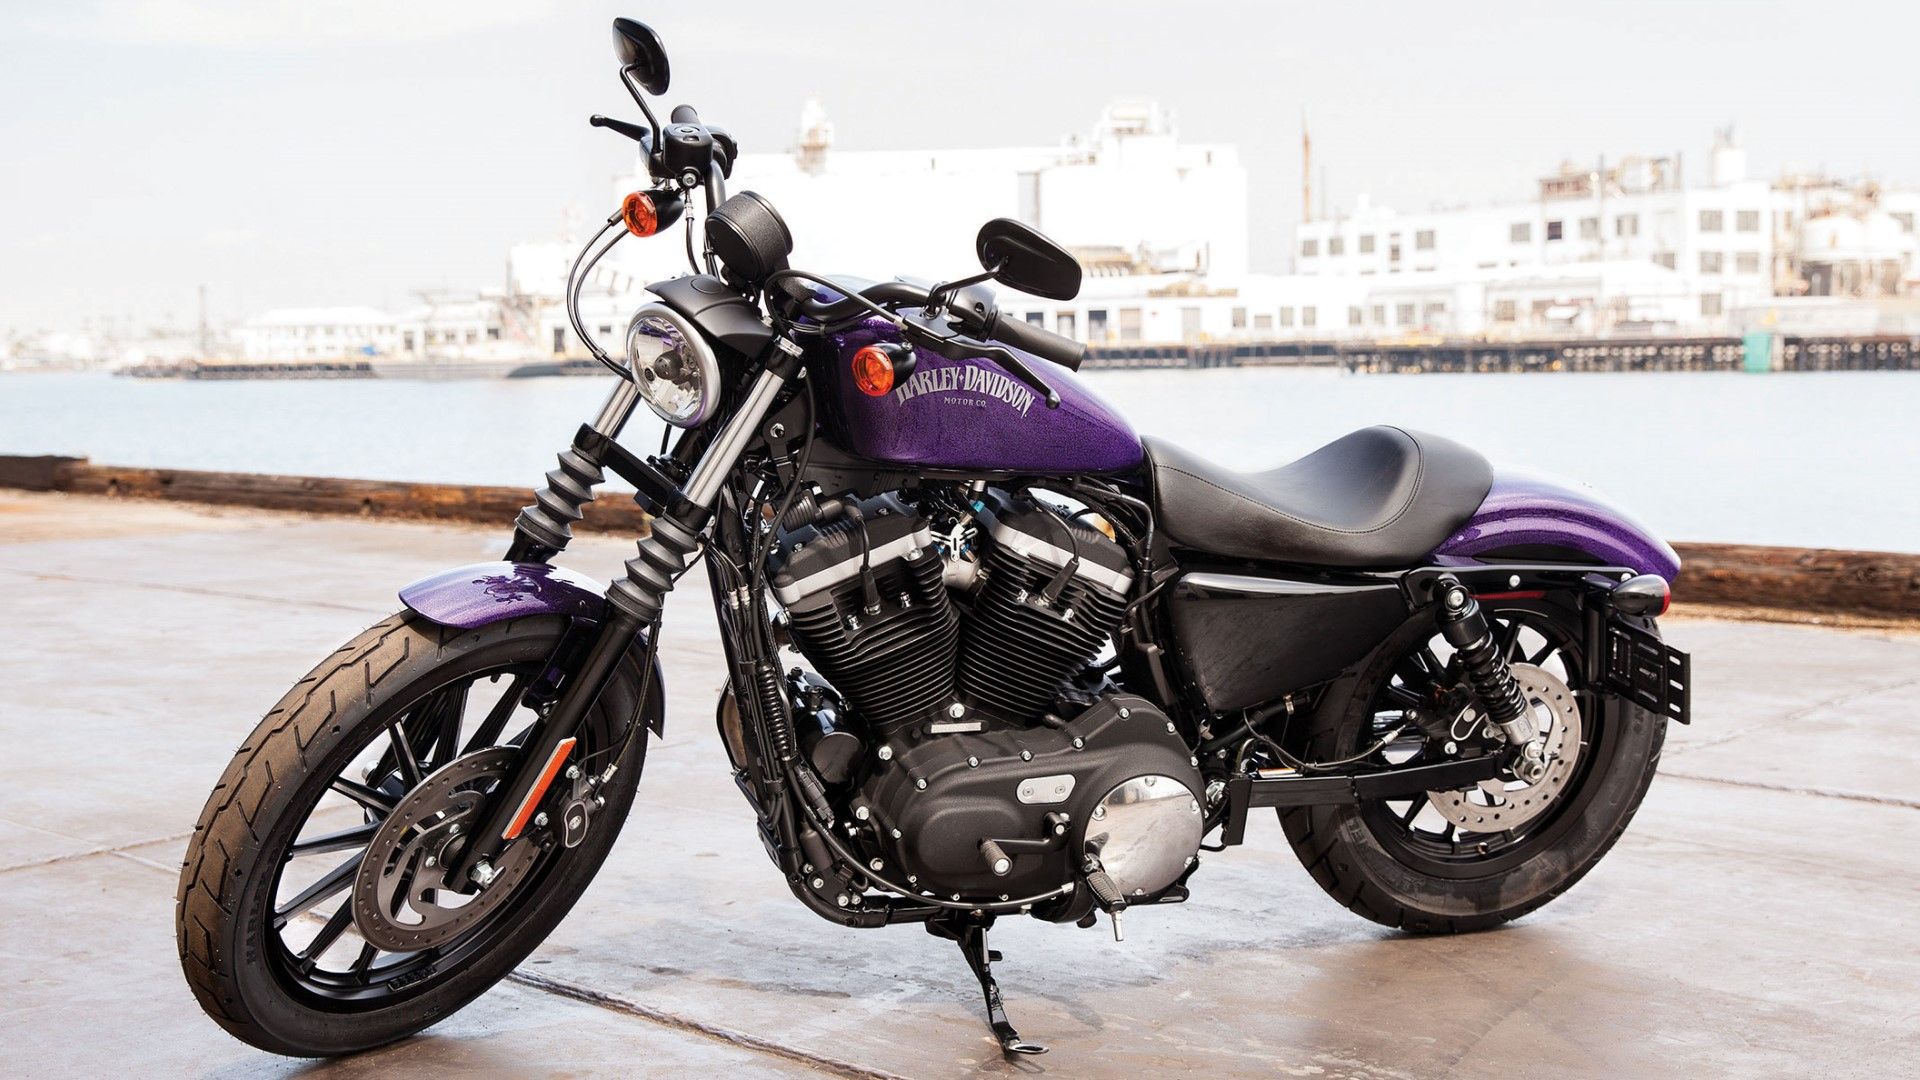 2014 Harley-Davidson Sportster Iron 883 in purple 